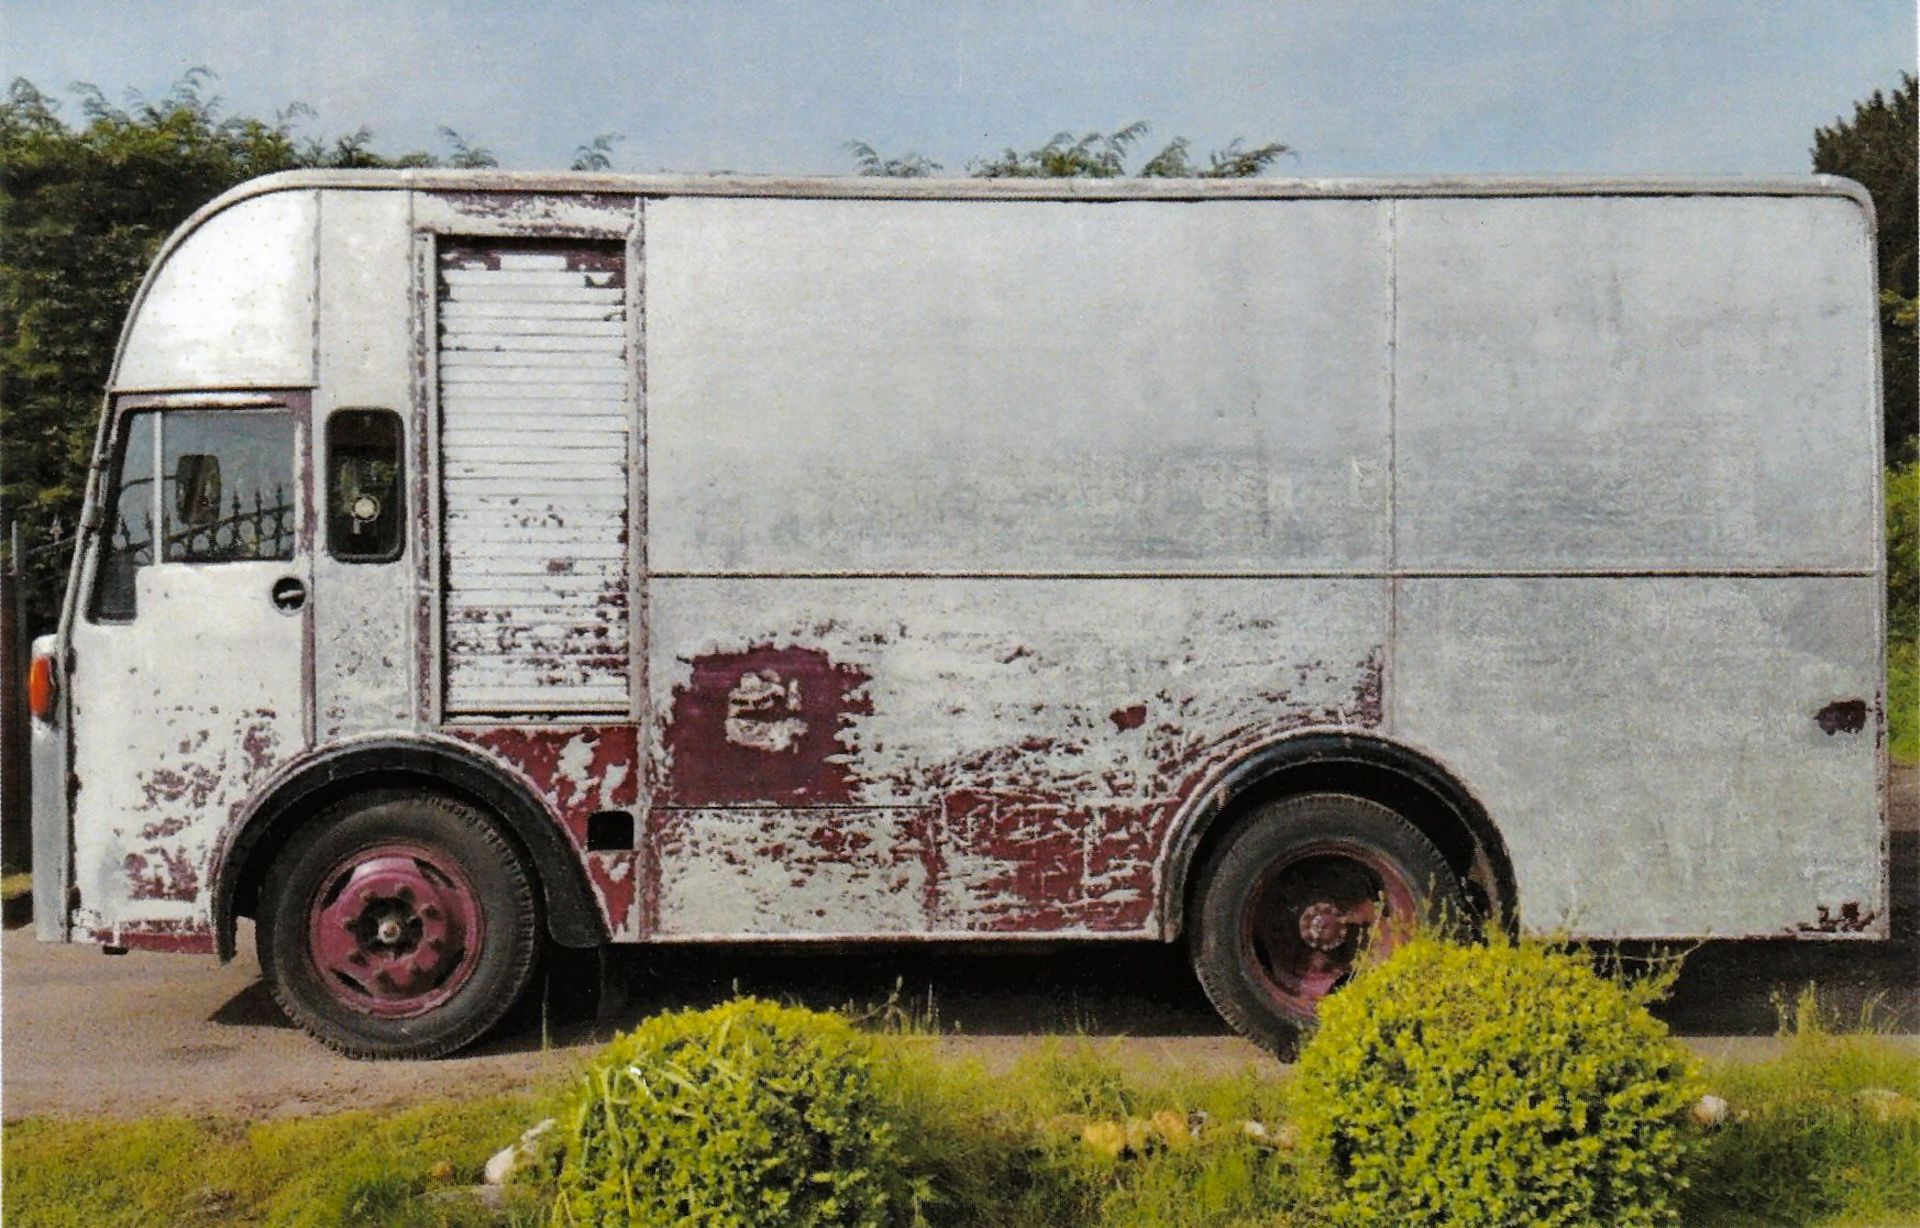 1967 Albion Claymore 5t box van Reg. No. NUU 663E This aluminium bodied box van was supplied new